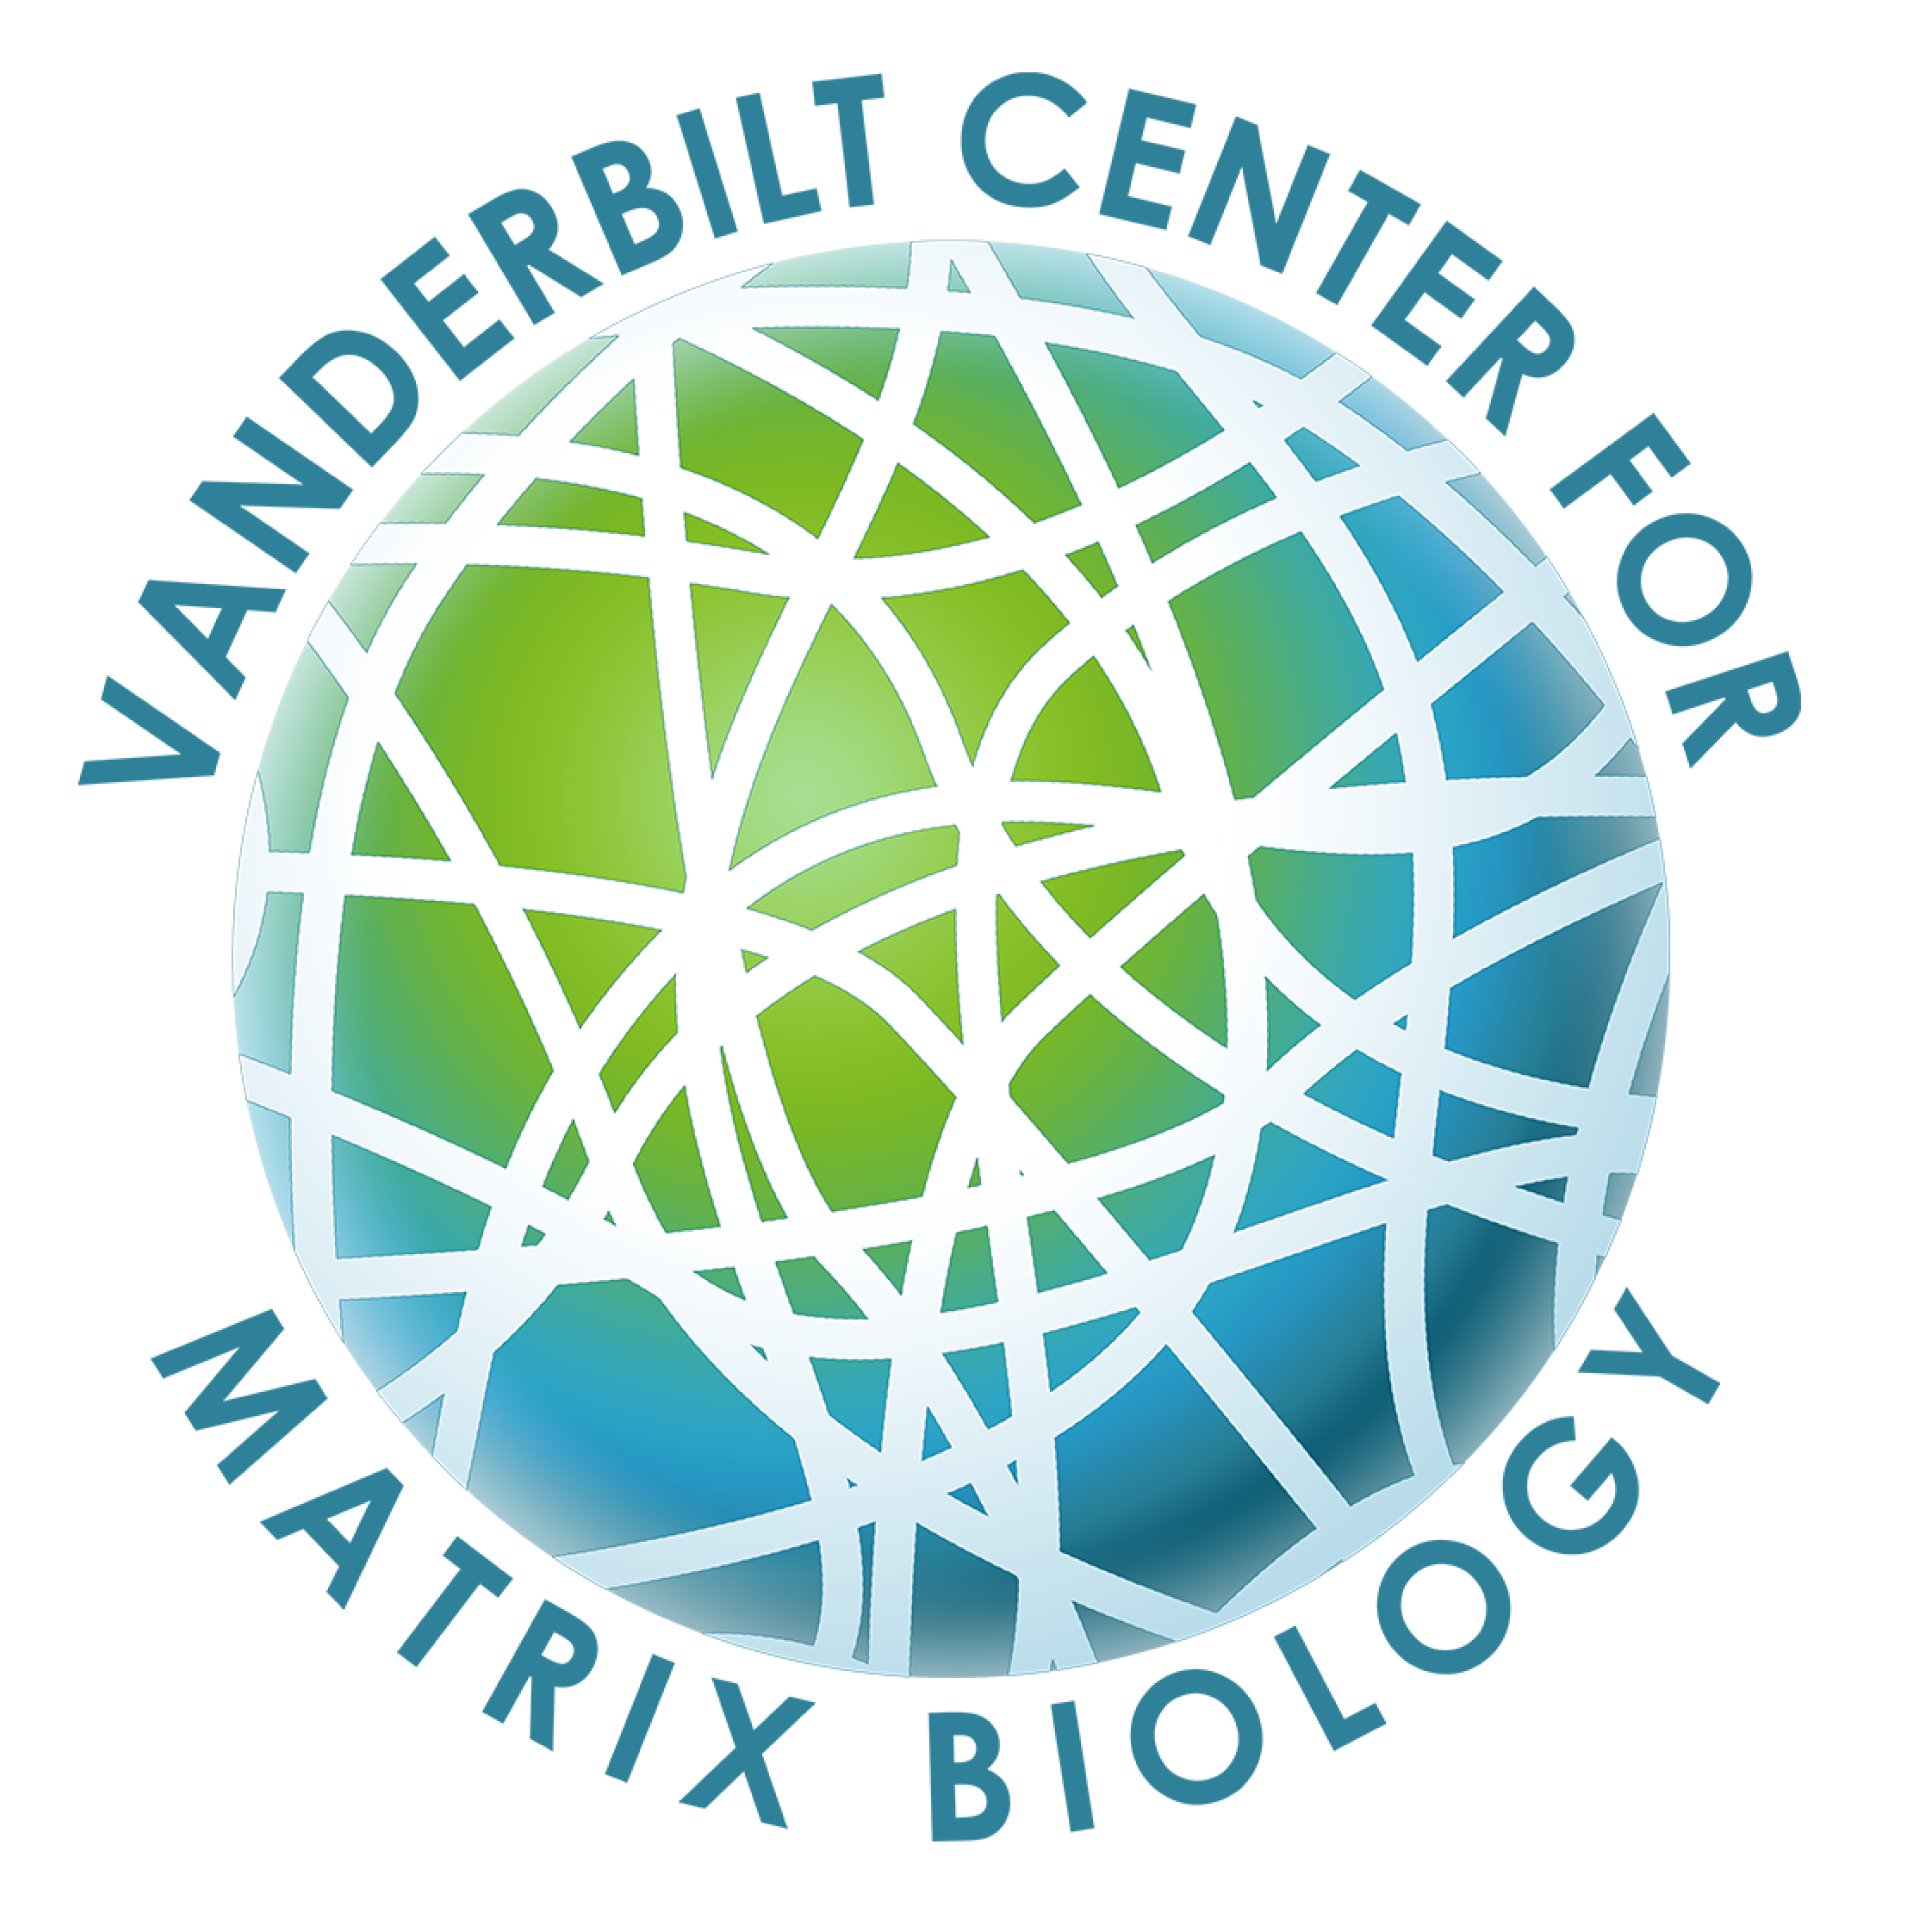 Vanderbilt Center for Matrix Biology